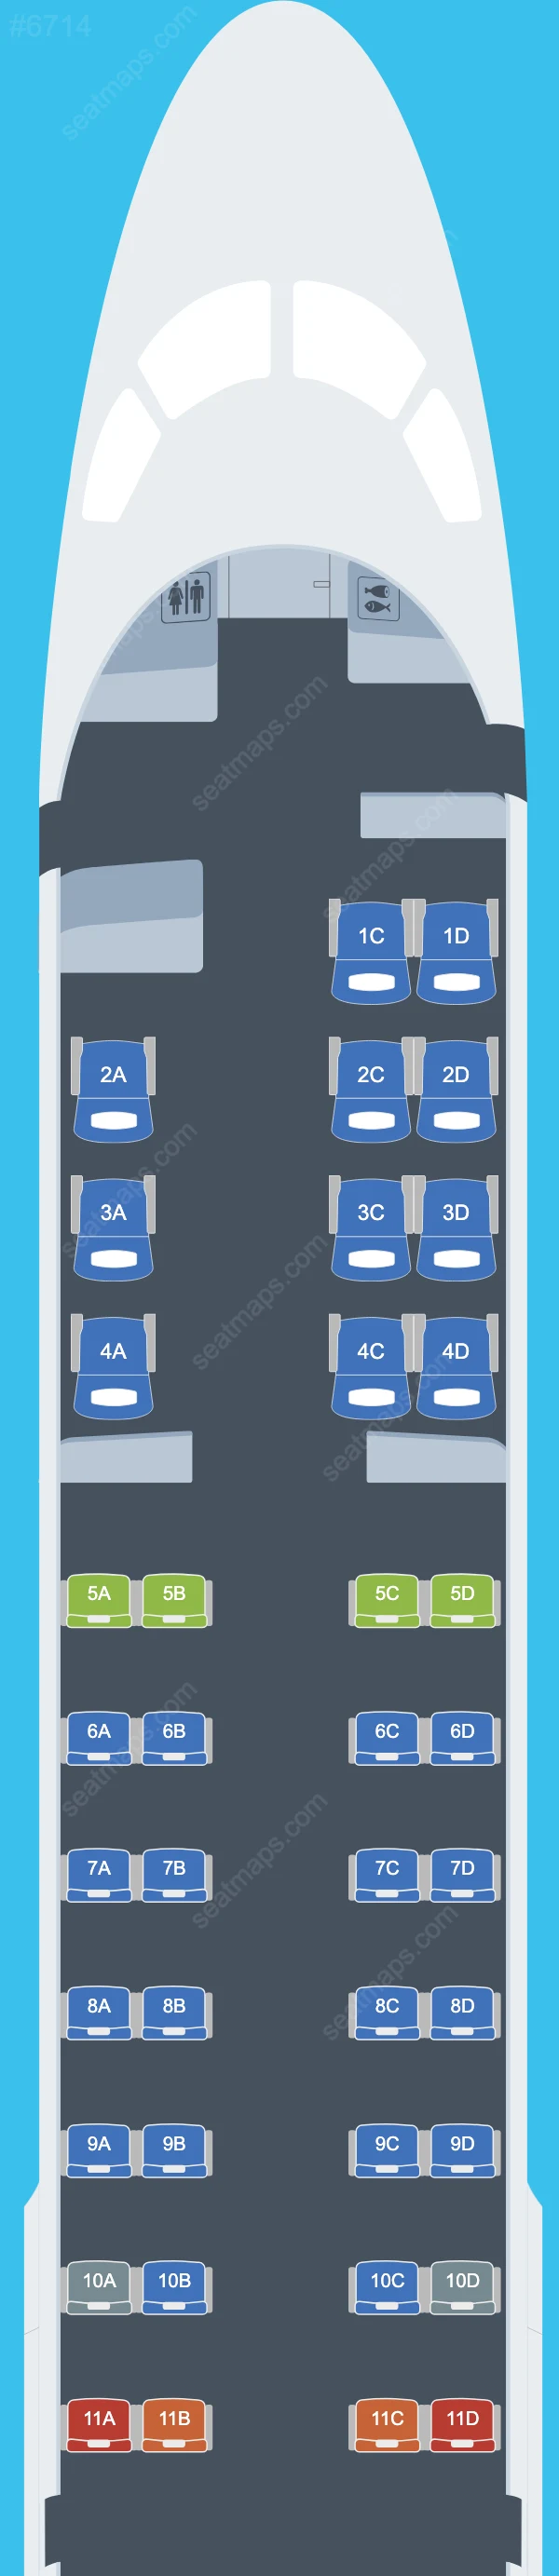 AeroMexico Connect (Aerolitoral) Embraer E190 Mapy miejsc E190